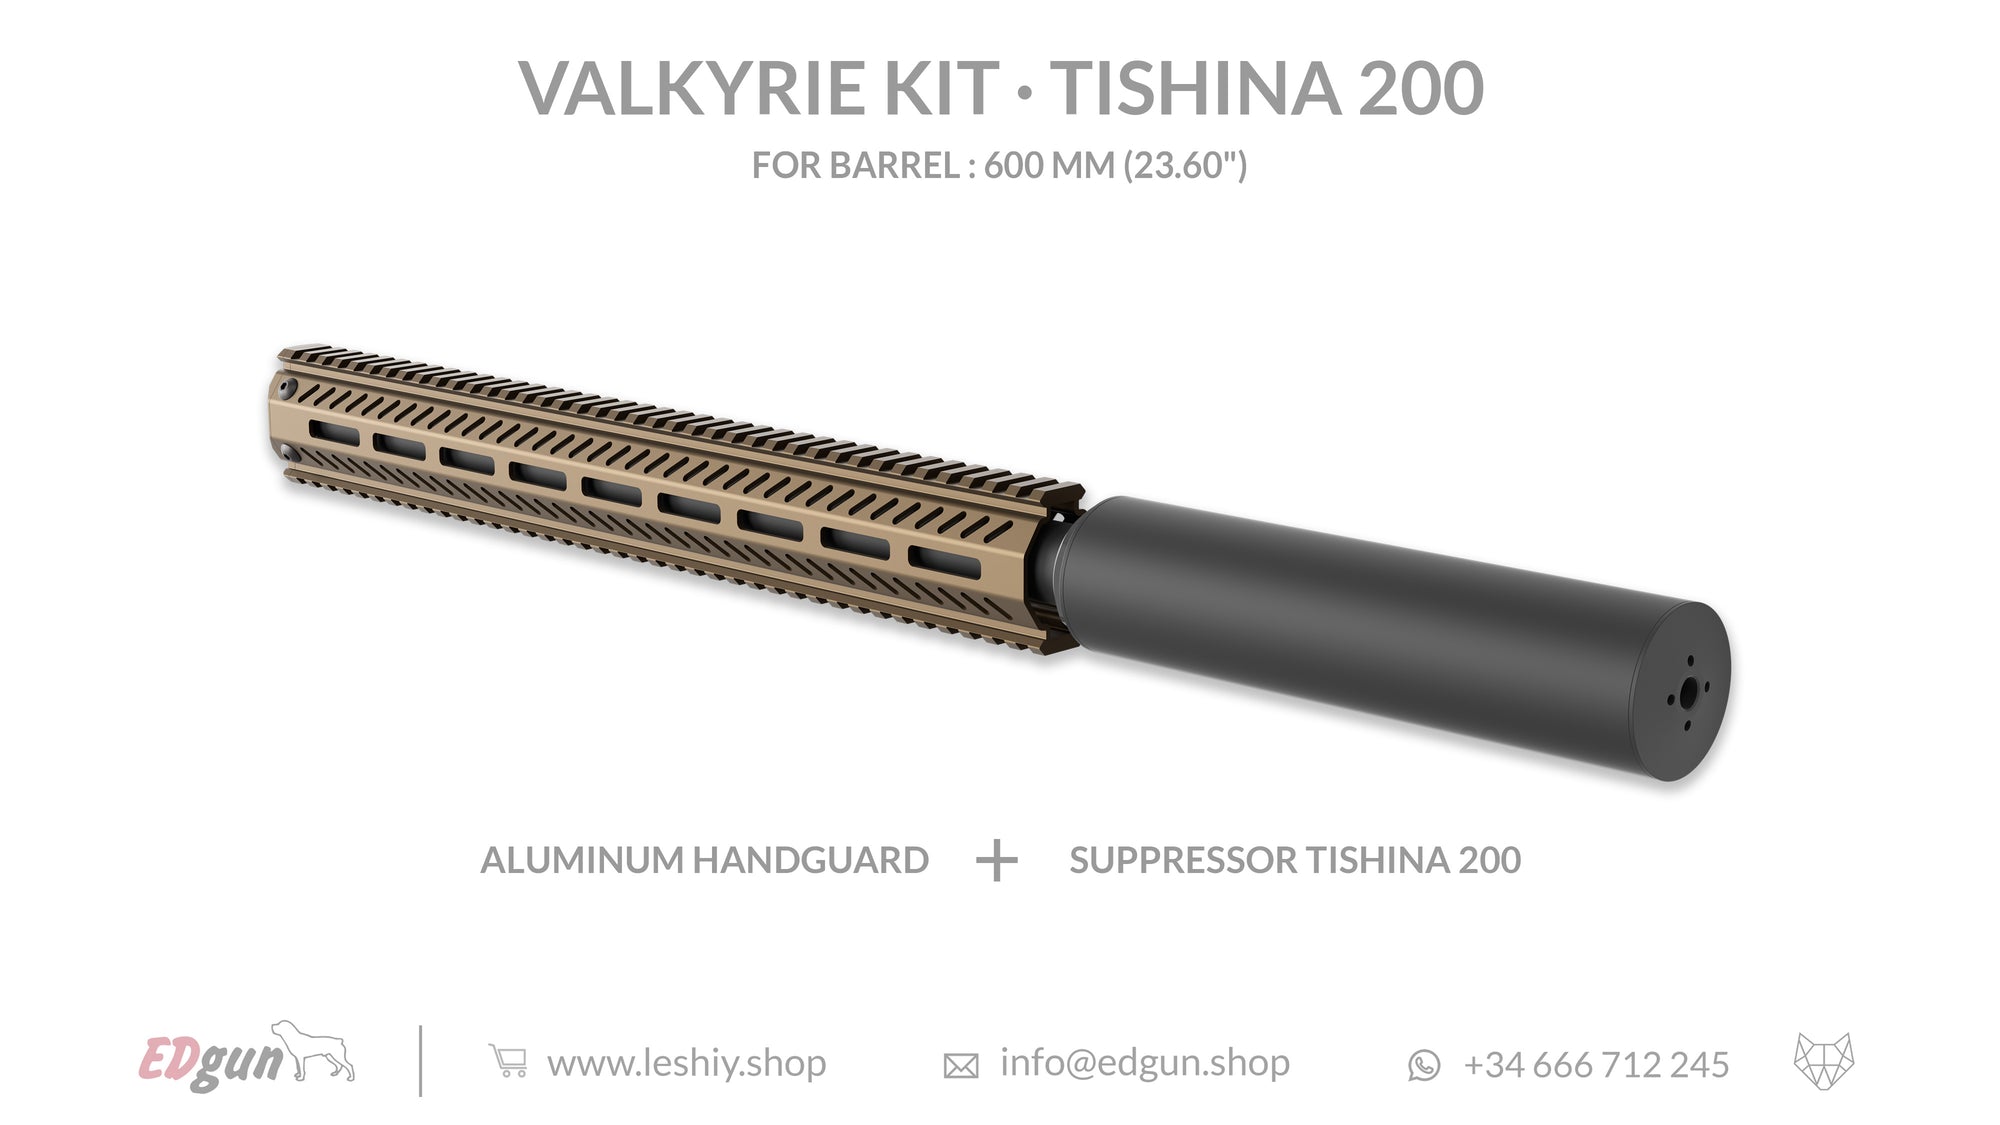 Kit Tishina 200 for barrel 600mm (23.60¨)